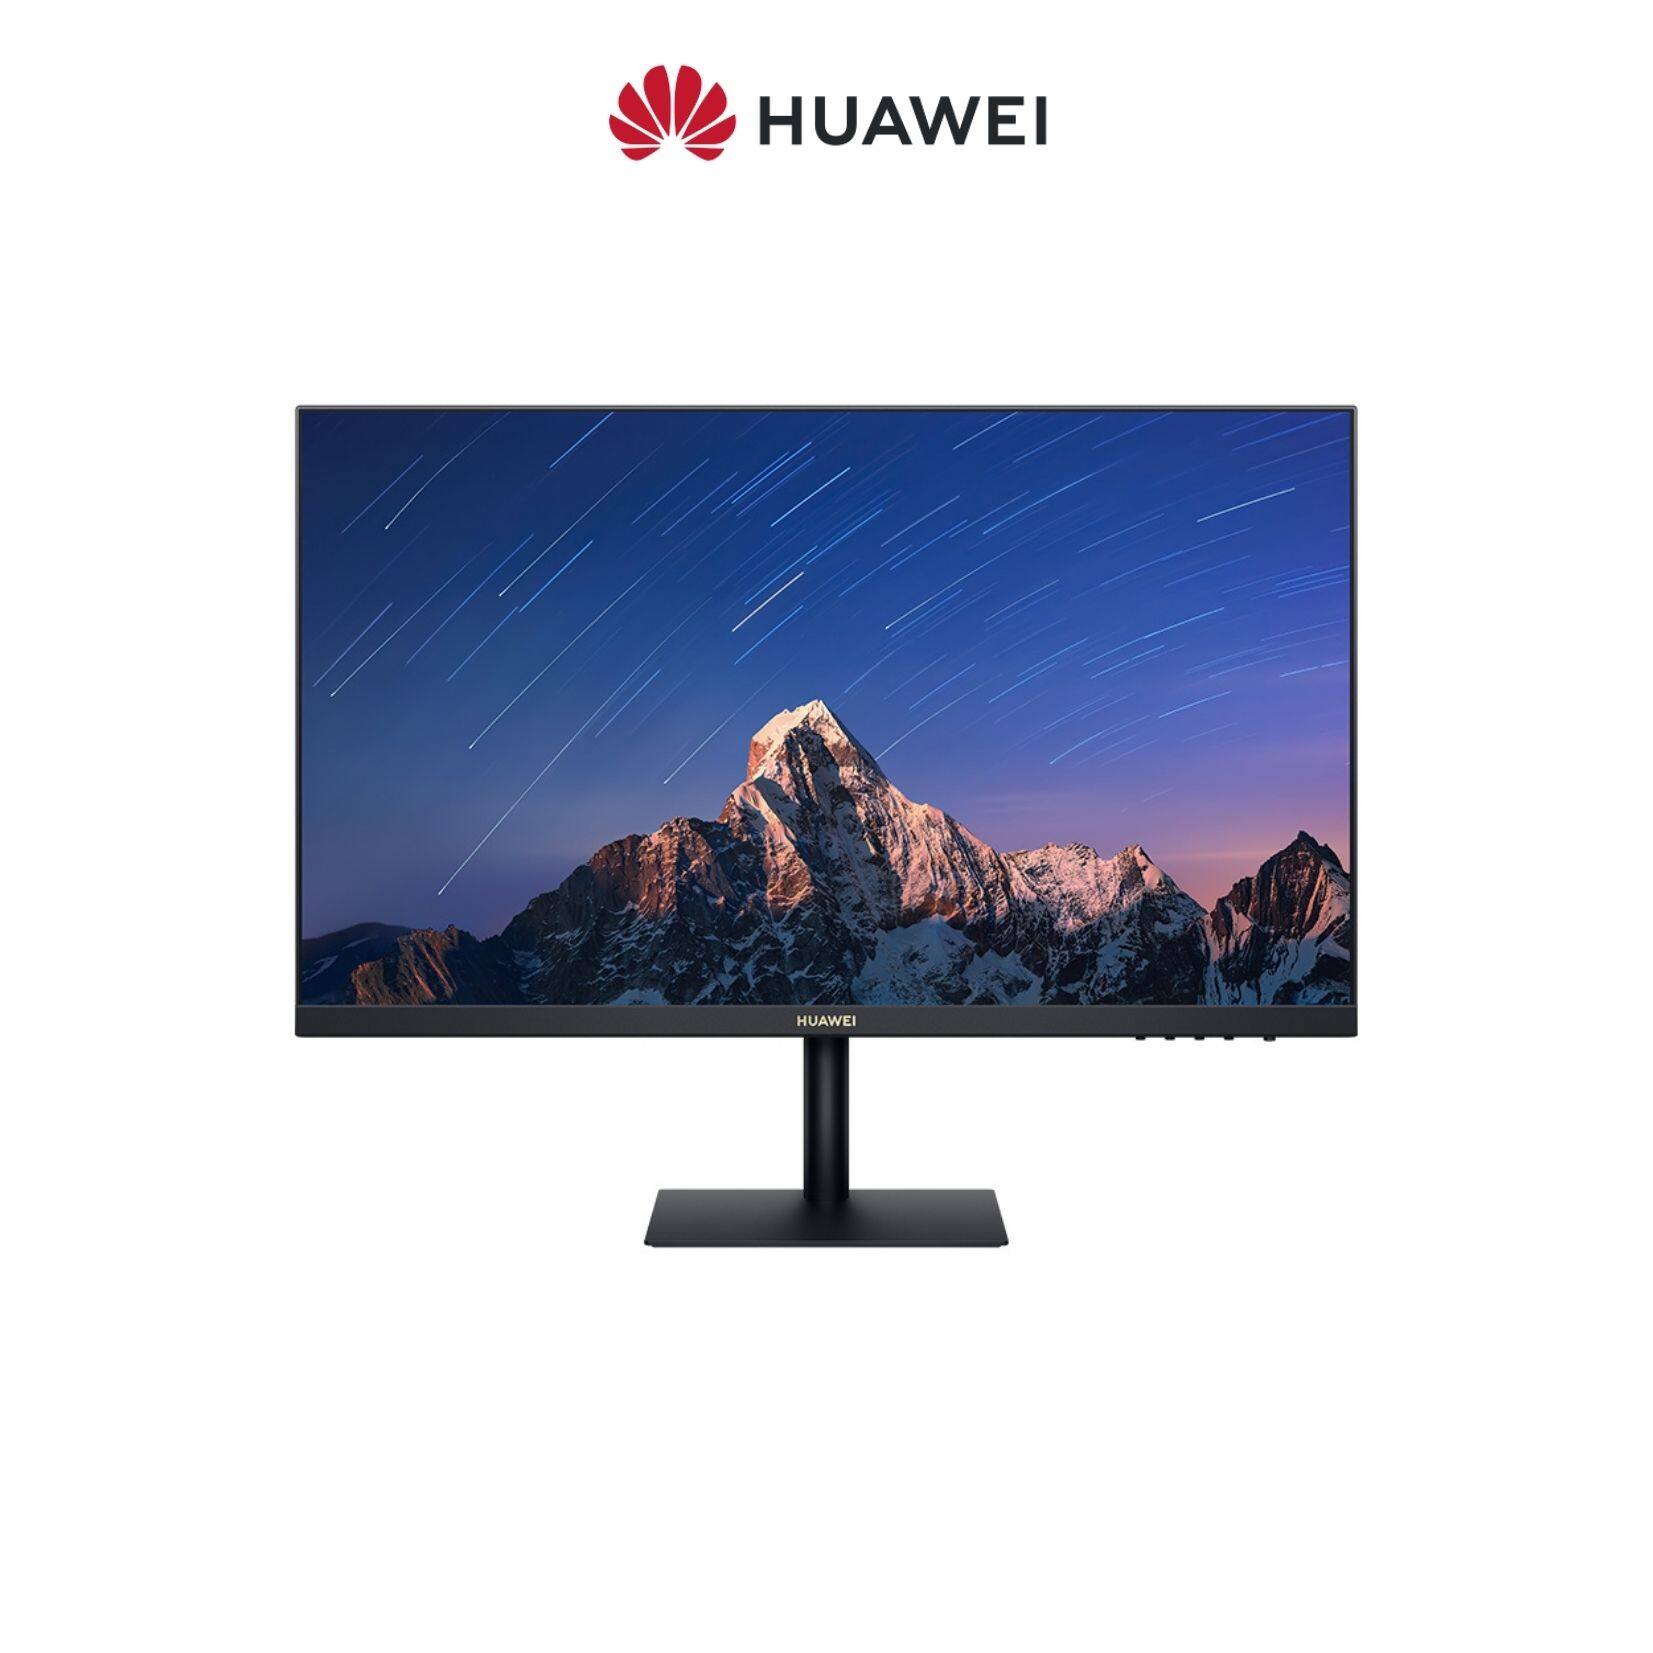 HUAWEI Display AD80 23.8 Inch Monitor - 1080P FullView Display